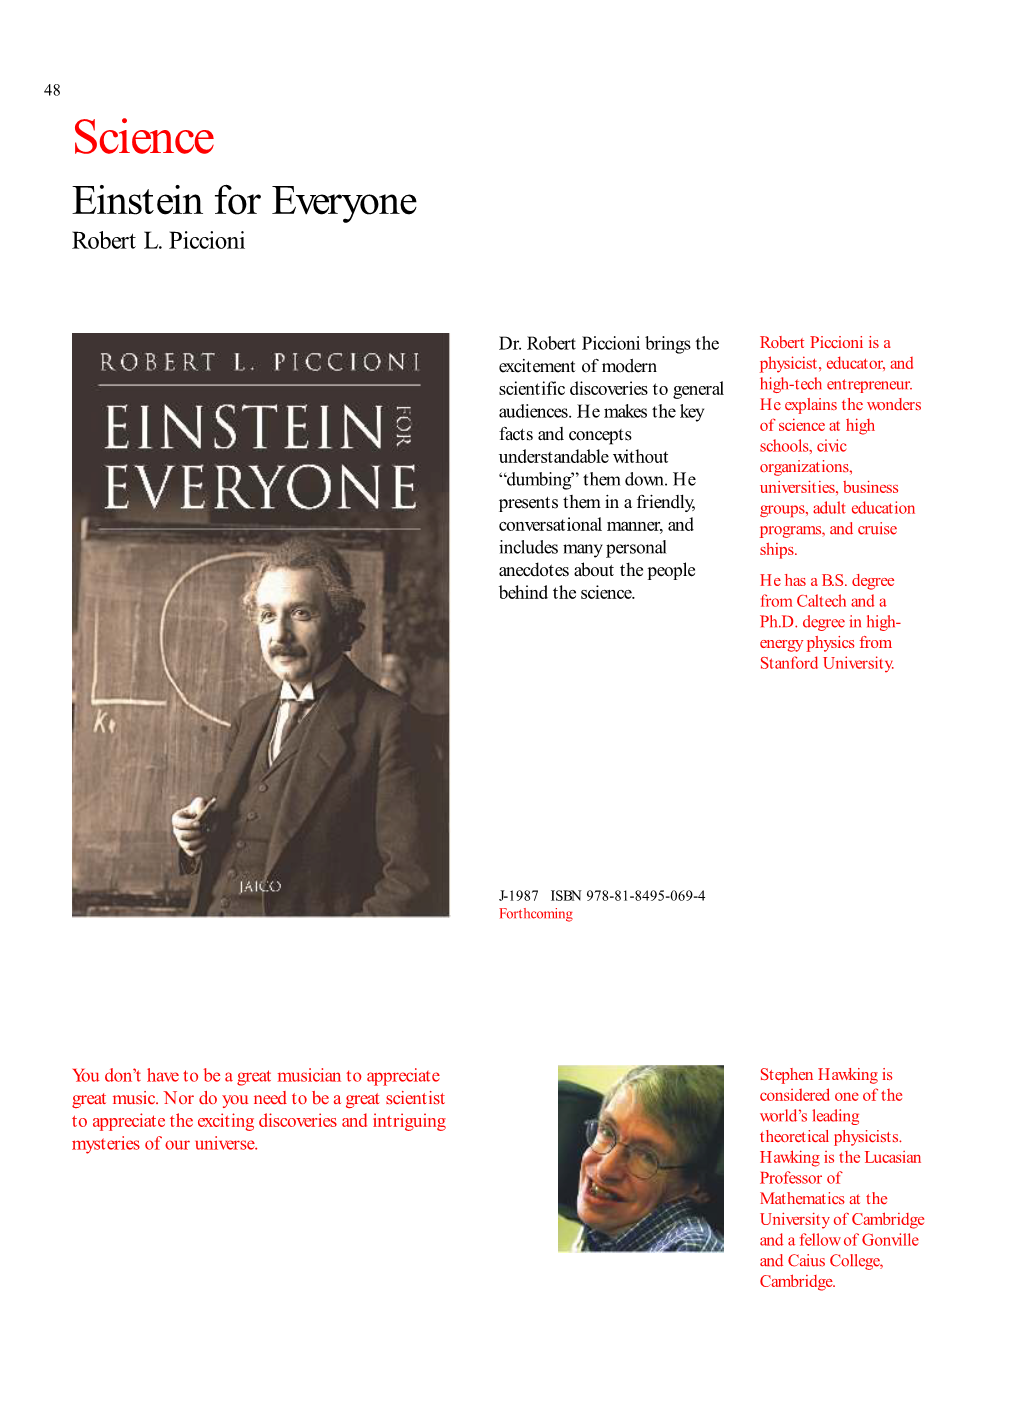 Science Einstein for Everyone Robert L